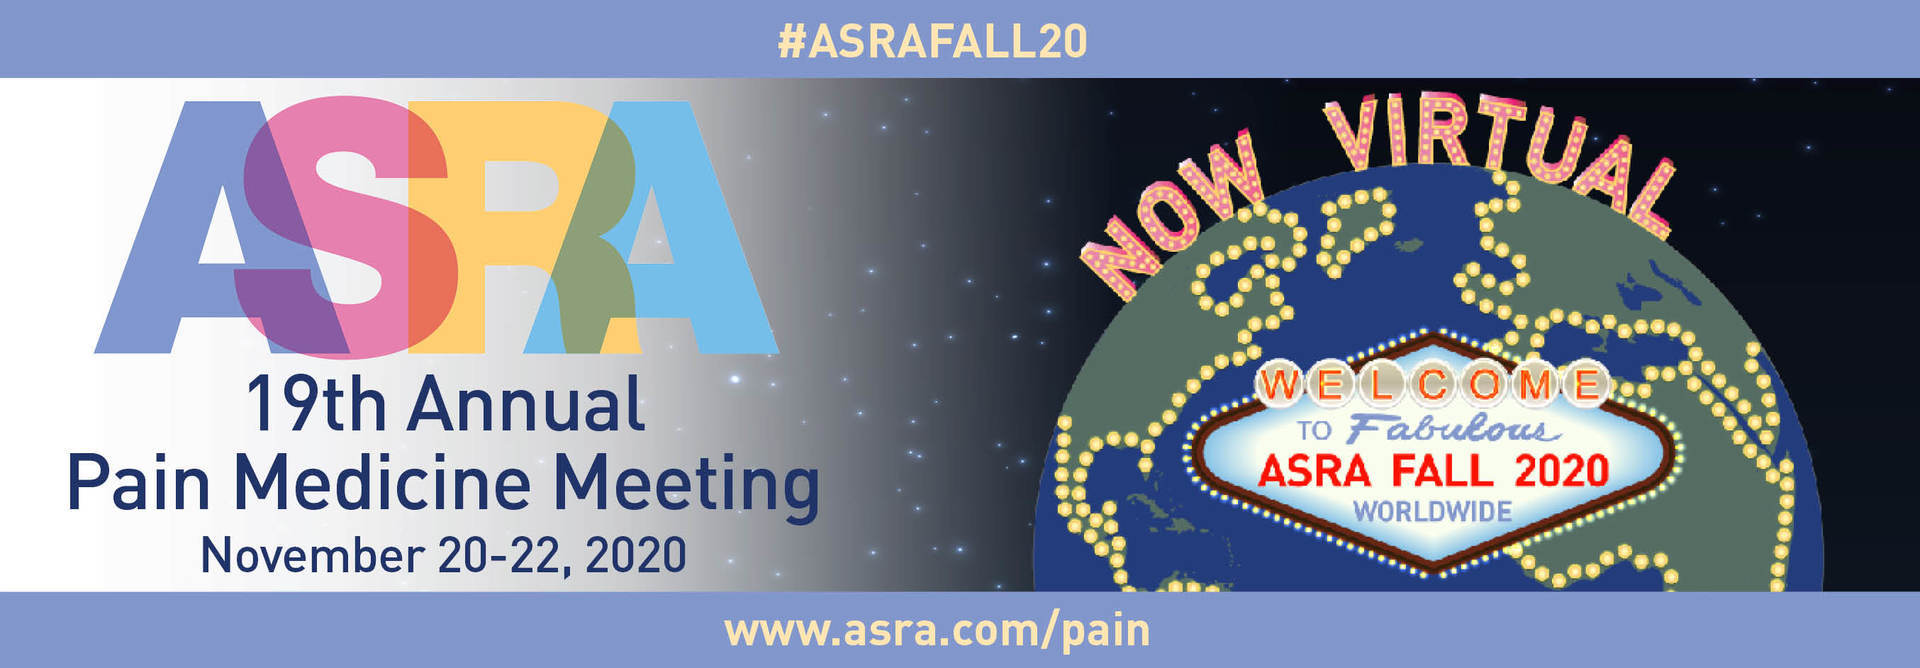 19th Annual Pain Medicine Meeting/ASRA Fall 2020 Worldwide - November 20-22 - now virtual